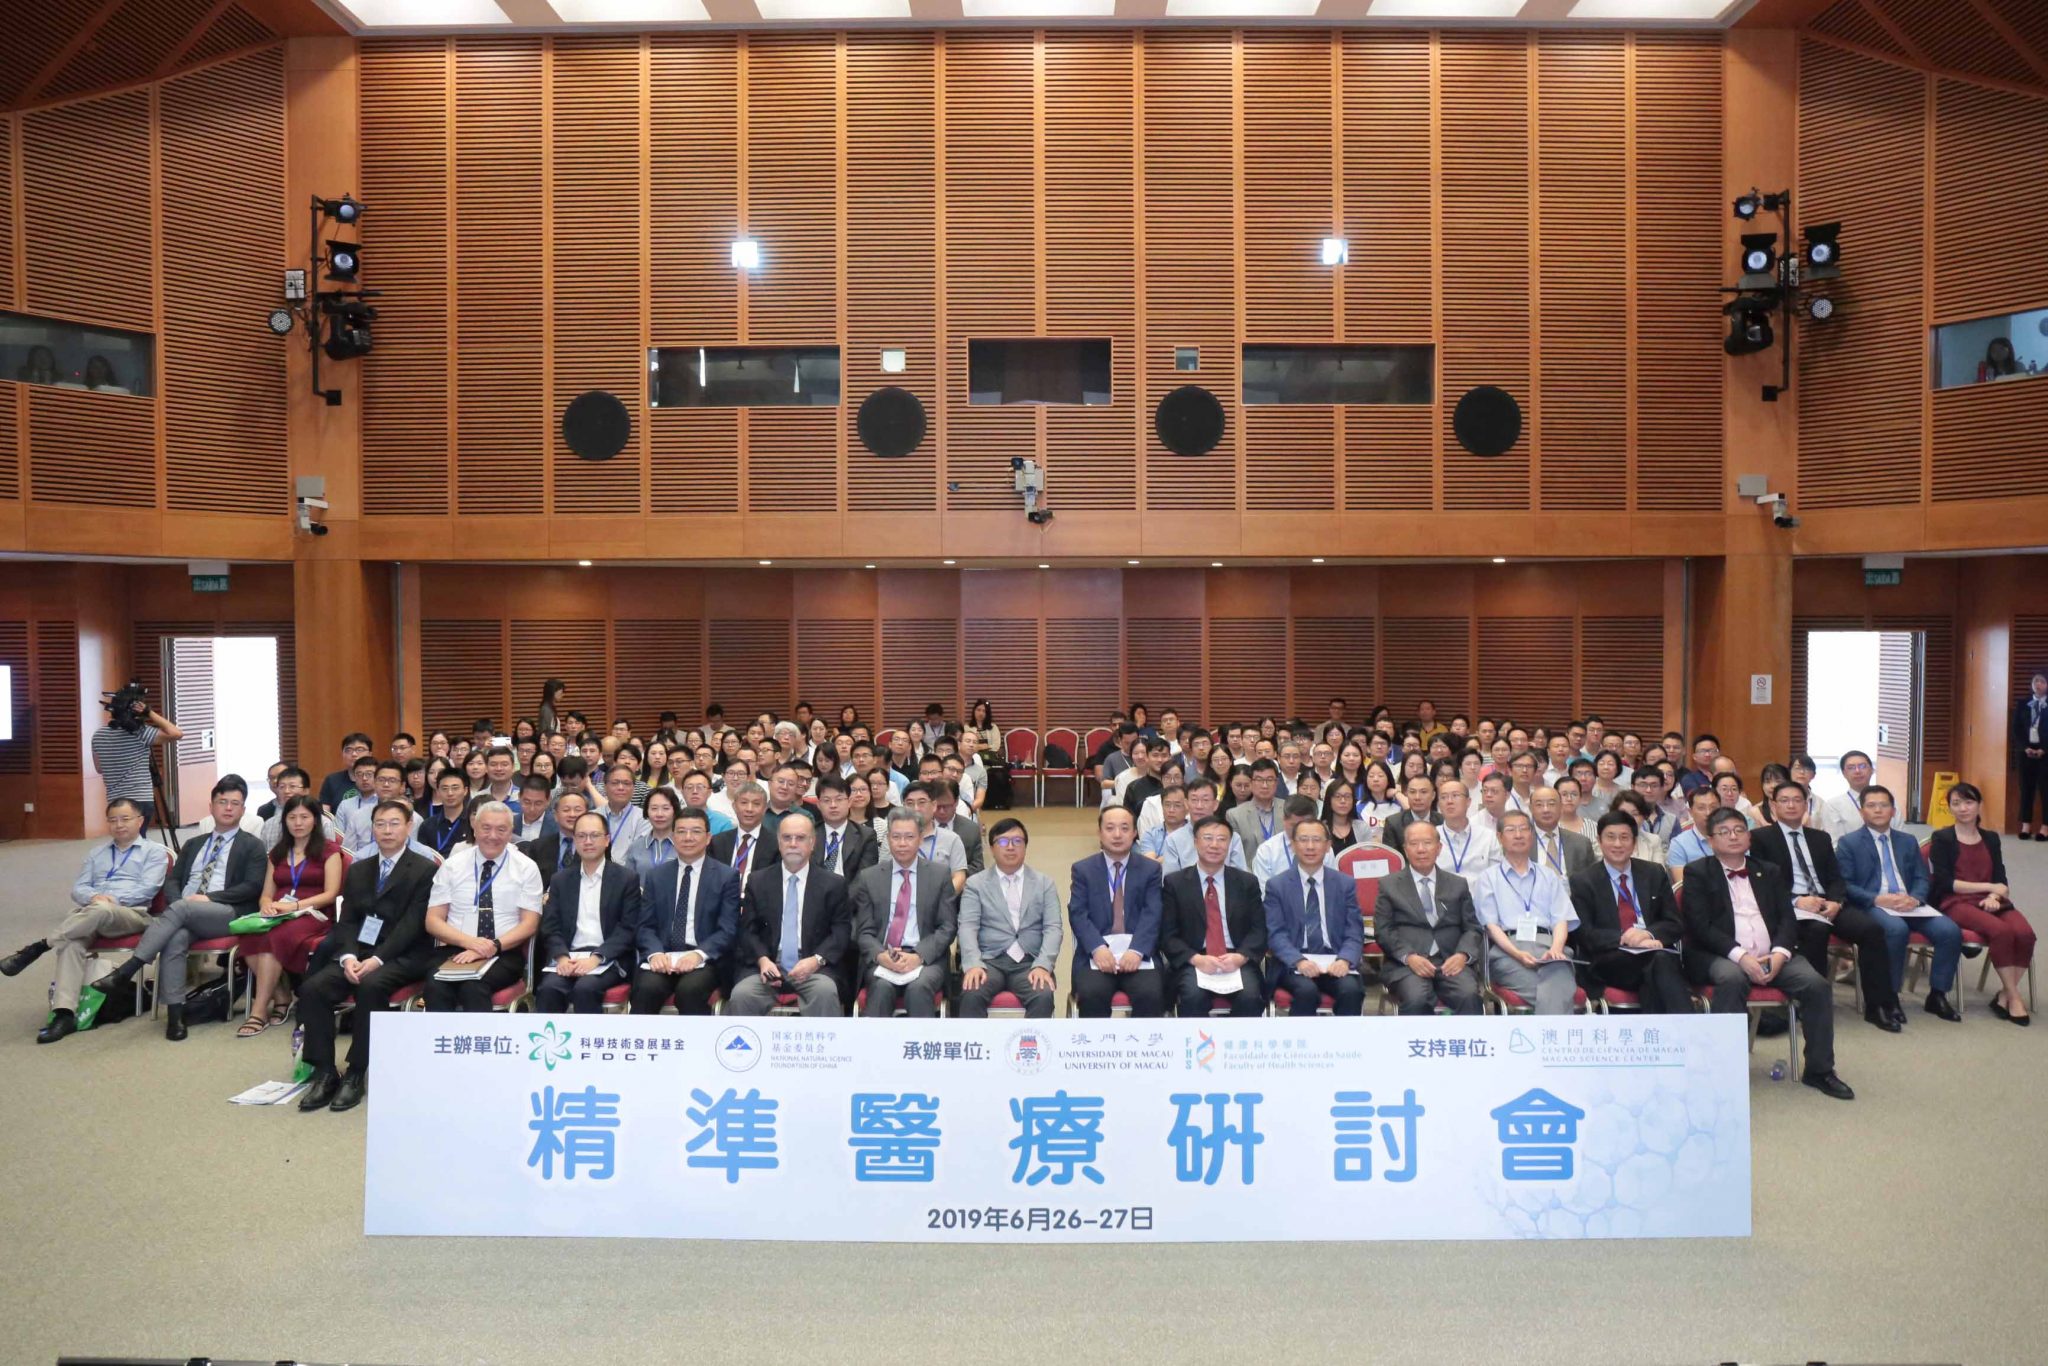 Precision medicine symposium opens in Macao